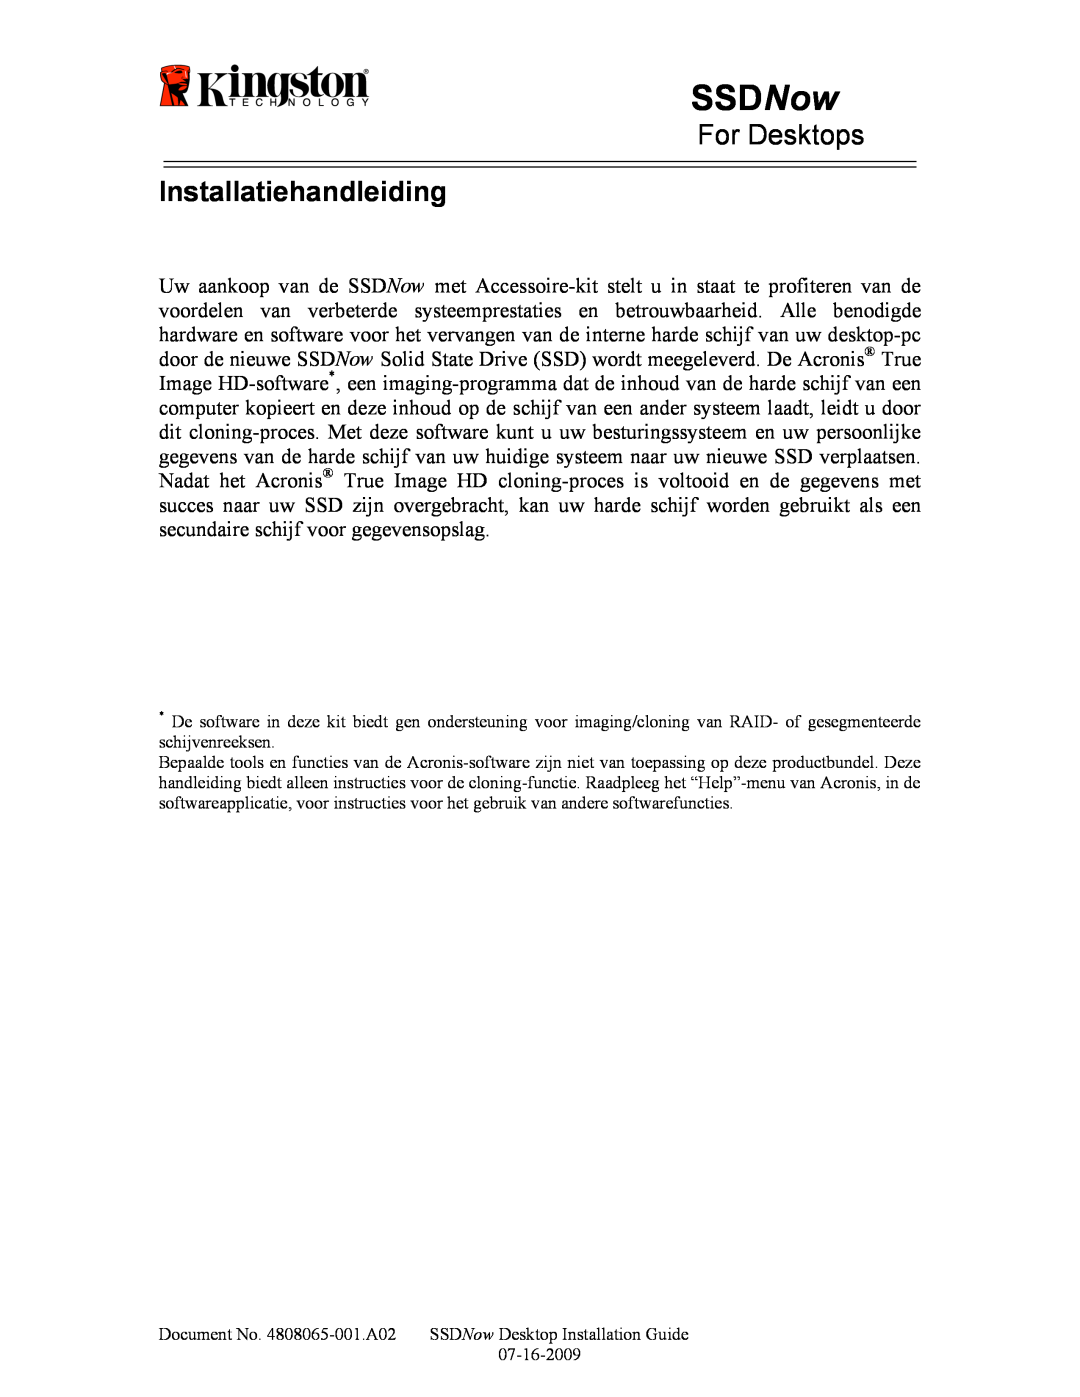 Kingston Technology 07-16-2009 manual Installatiehandleiding, SSDNow, For Desktops 